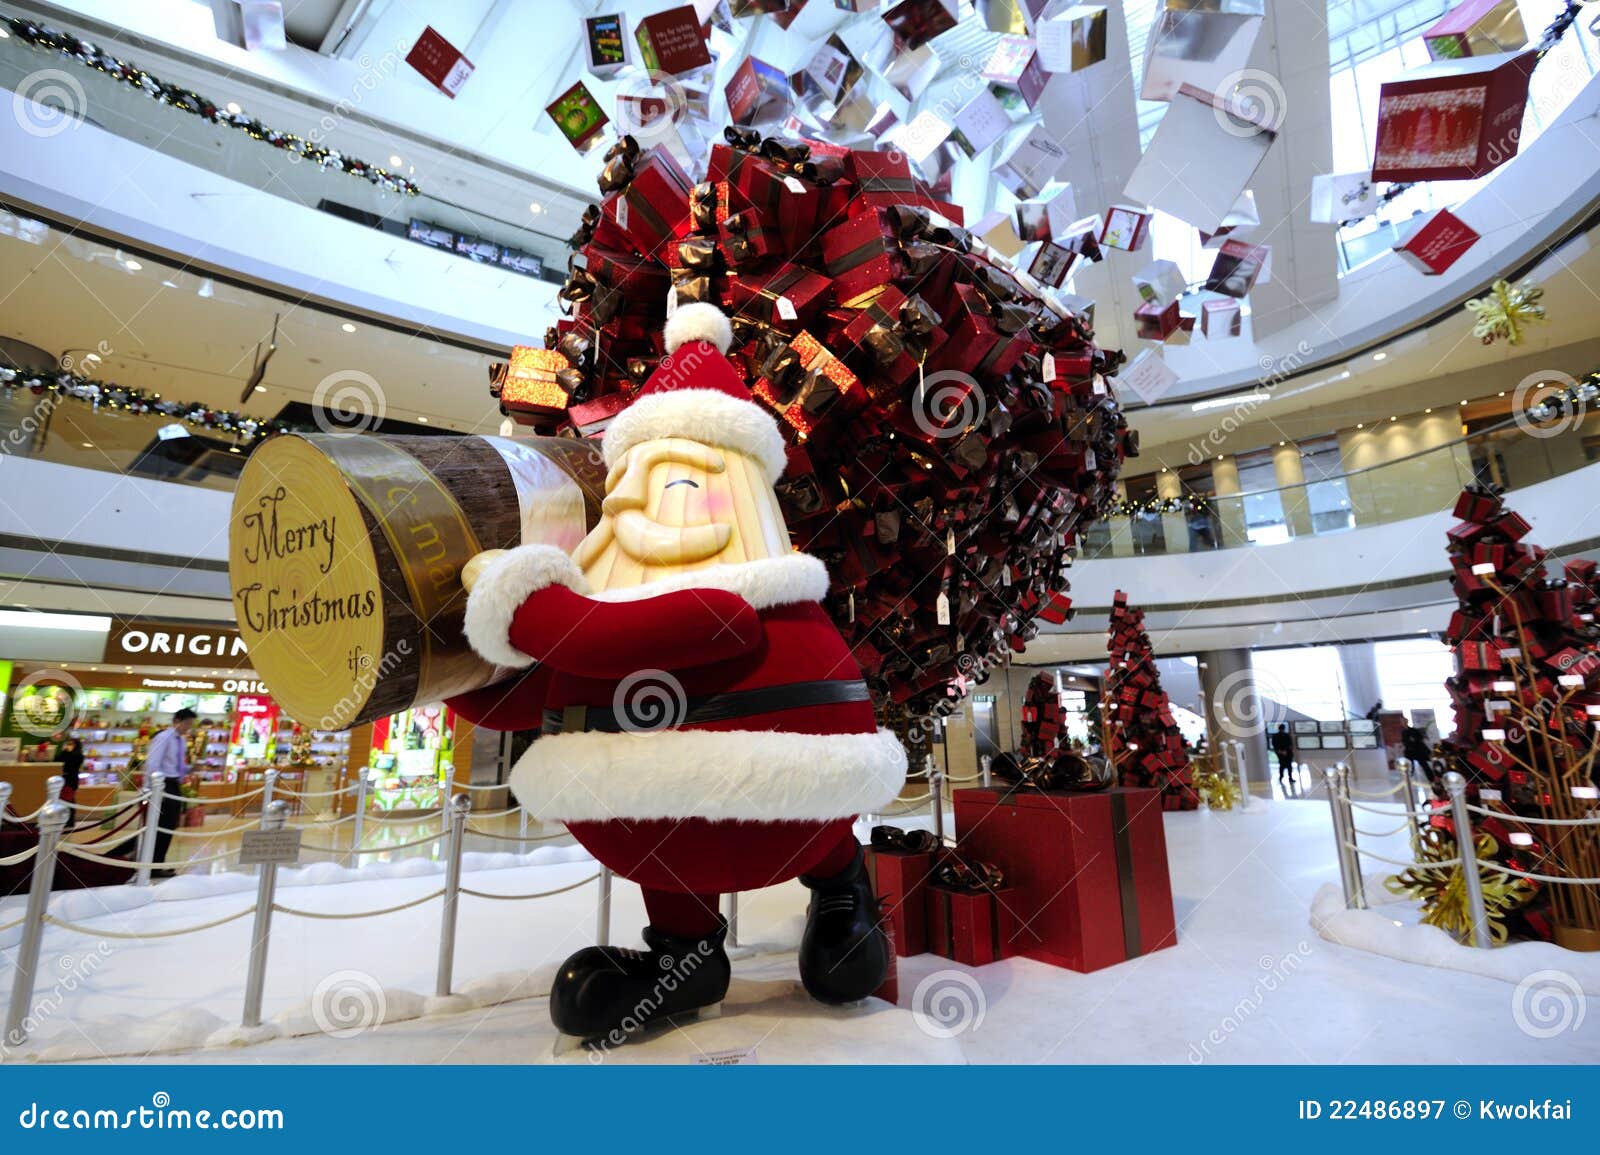  Christmas  Decoration  In Hong  Kong  Editorial Photography 